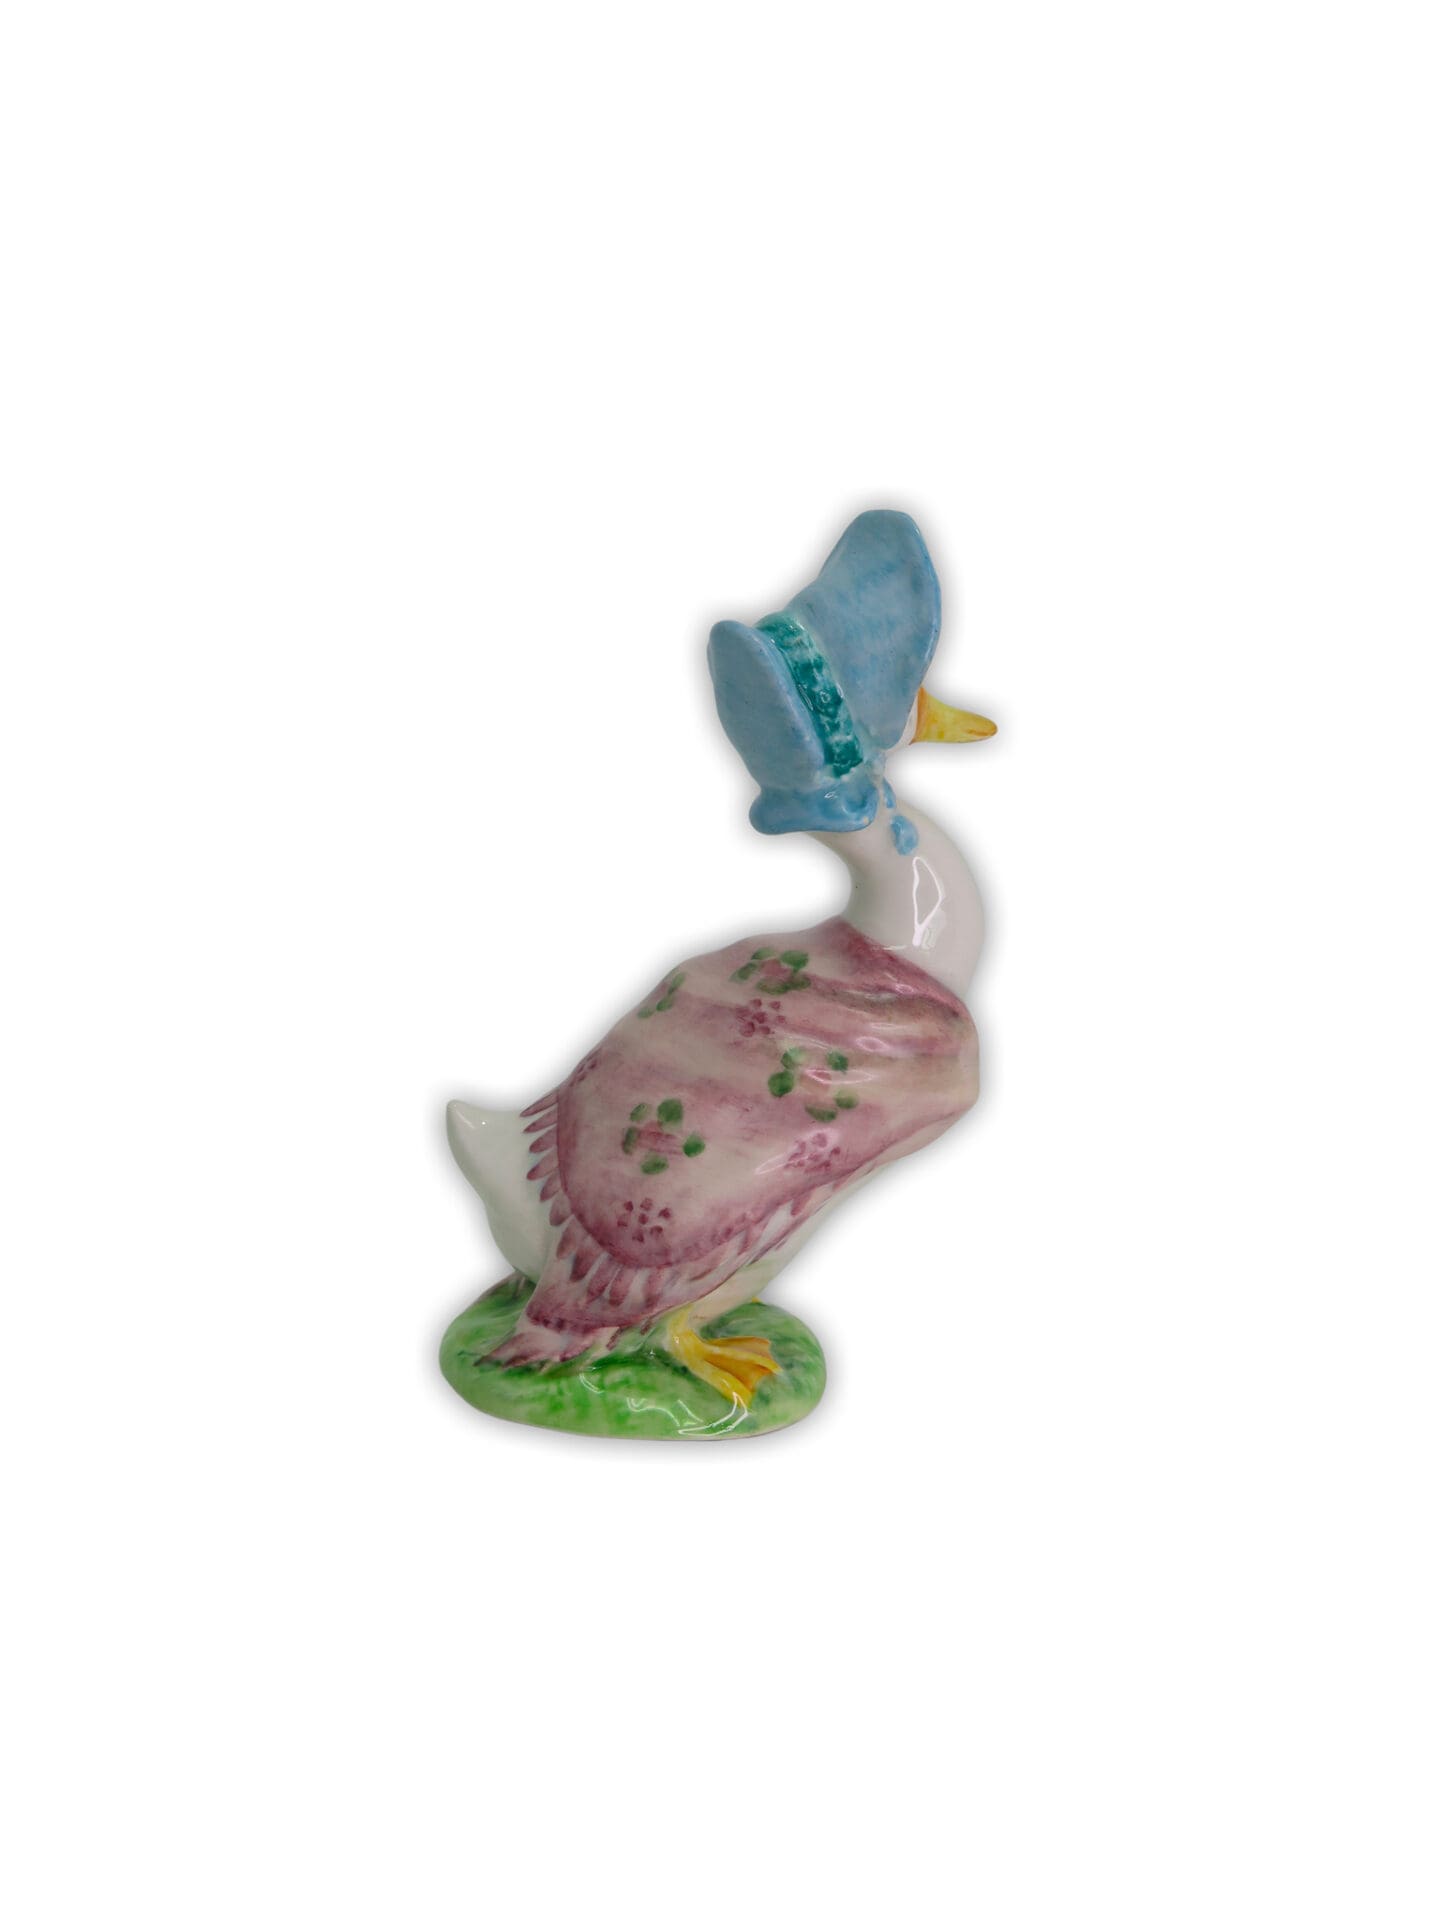 Beatrix Potter Jemima Puddle-Duck figurine.